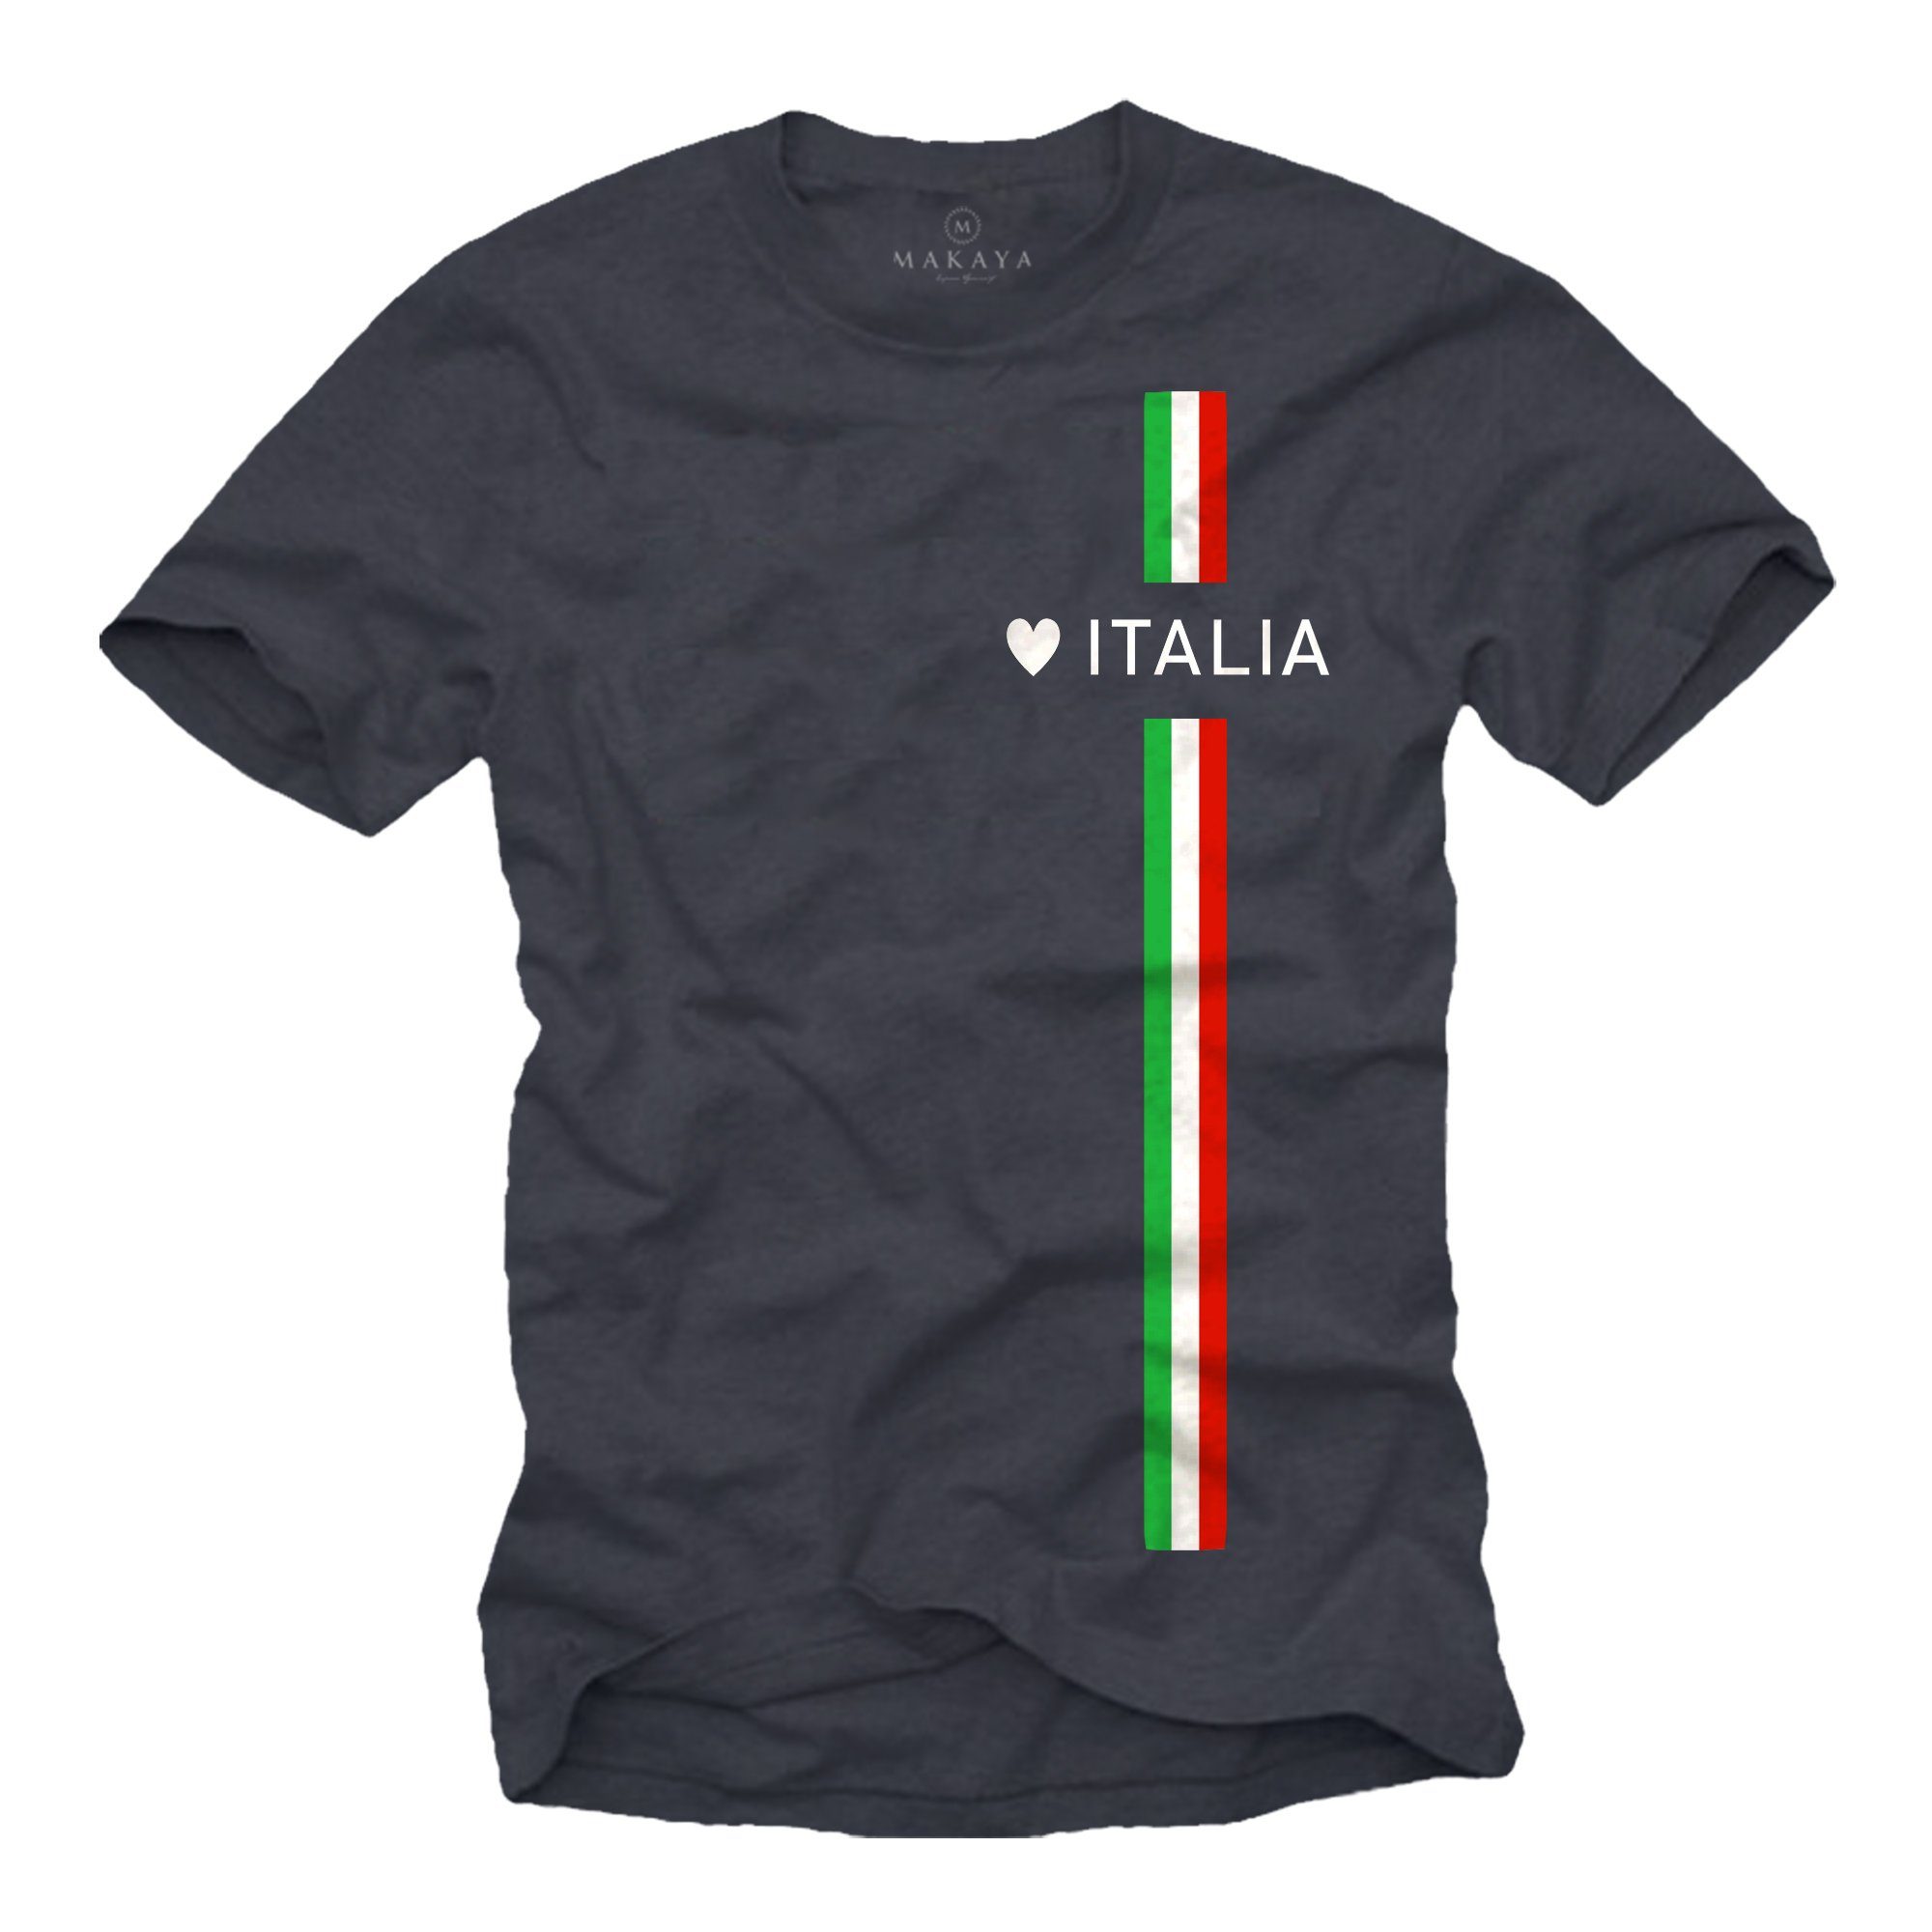 MAKAYA T-Shirt Herren Italia Herz Italienische Flagge Fahne Fußball Trikot Italien Jungs, Männer Blaugrau